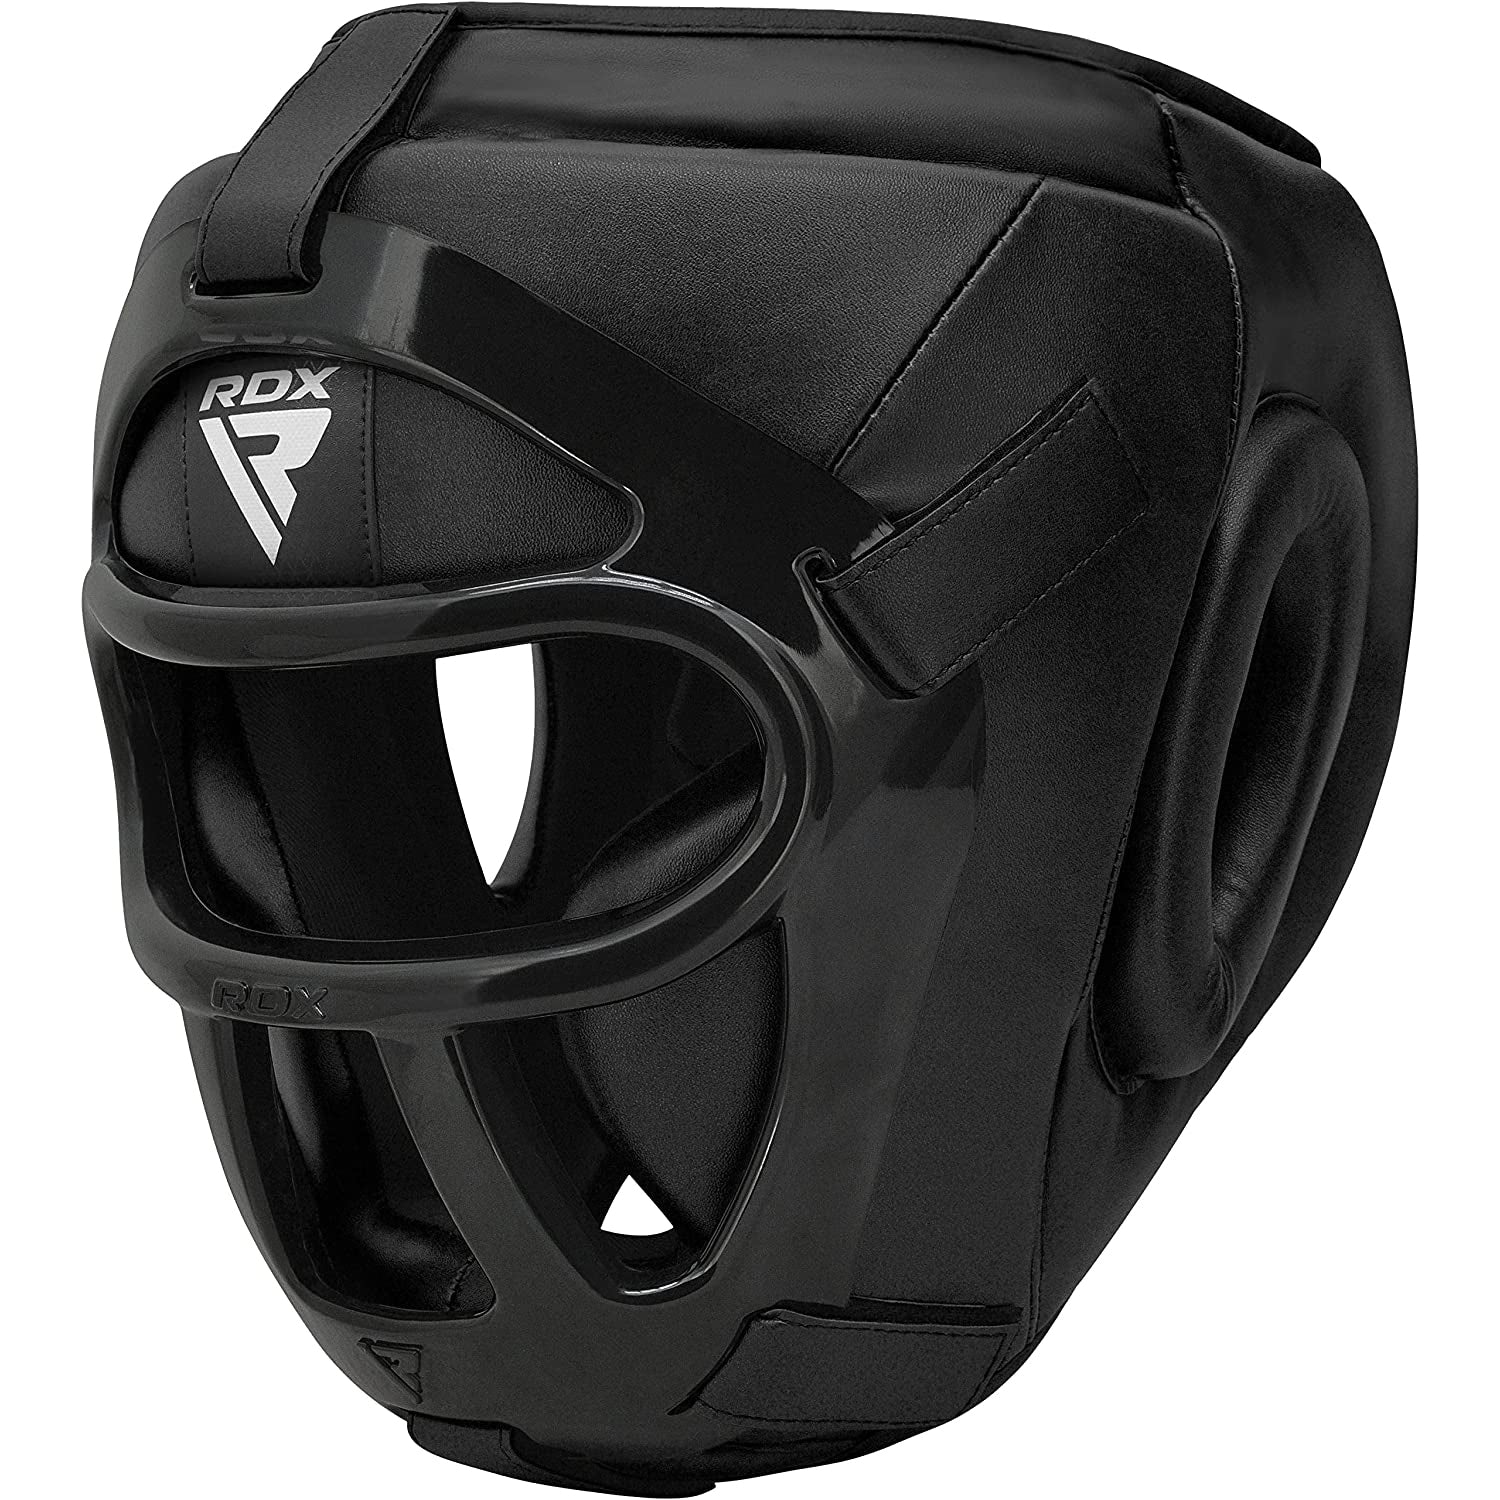 RDX T1 Full Face Protection Headgear for Boxing, MMA, BJJ, Muay Thai, Kickboxing - BLACK - MEDIUM - Pro-Distributing